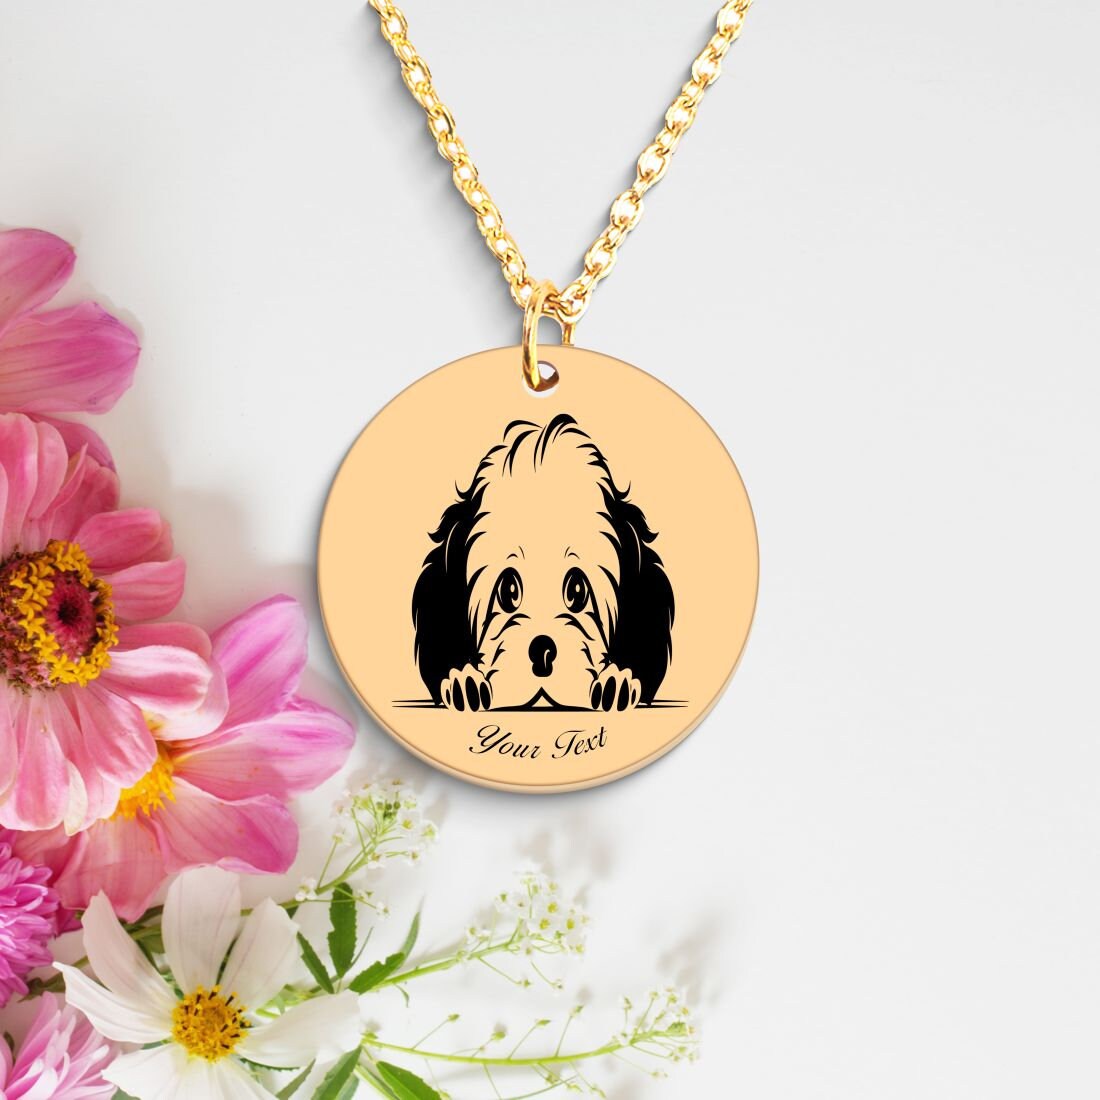 Bichon Frise Dog Portrait Necklace - Personalizable Jewelry